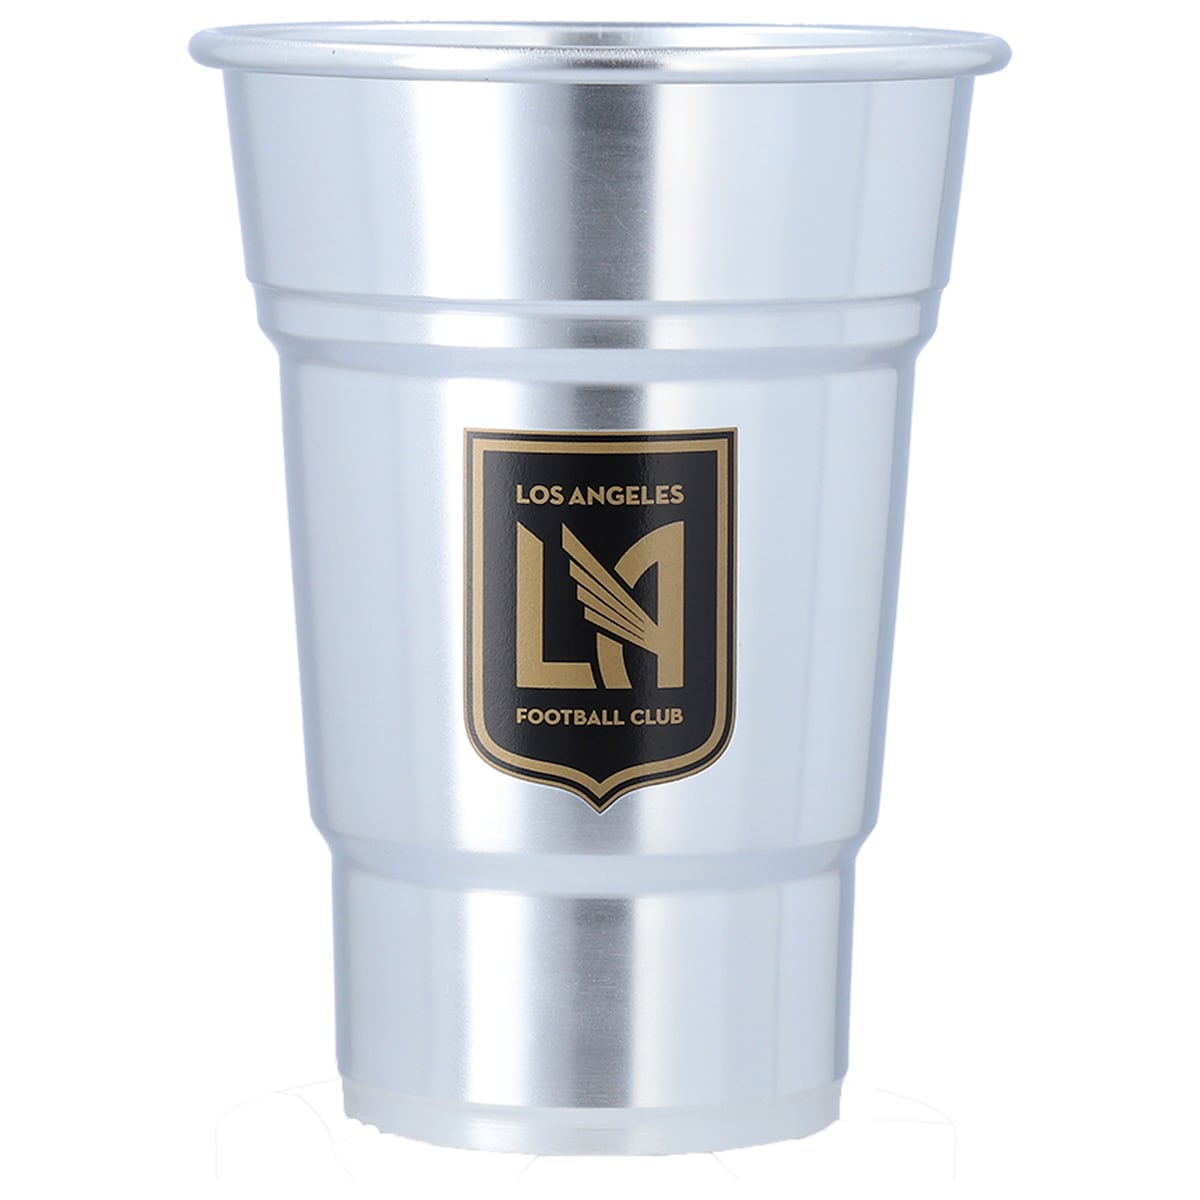 MLS LAFC r[WbL The Memory Company (CLL S22 Aluminum Party Cup)